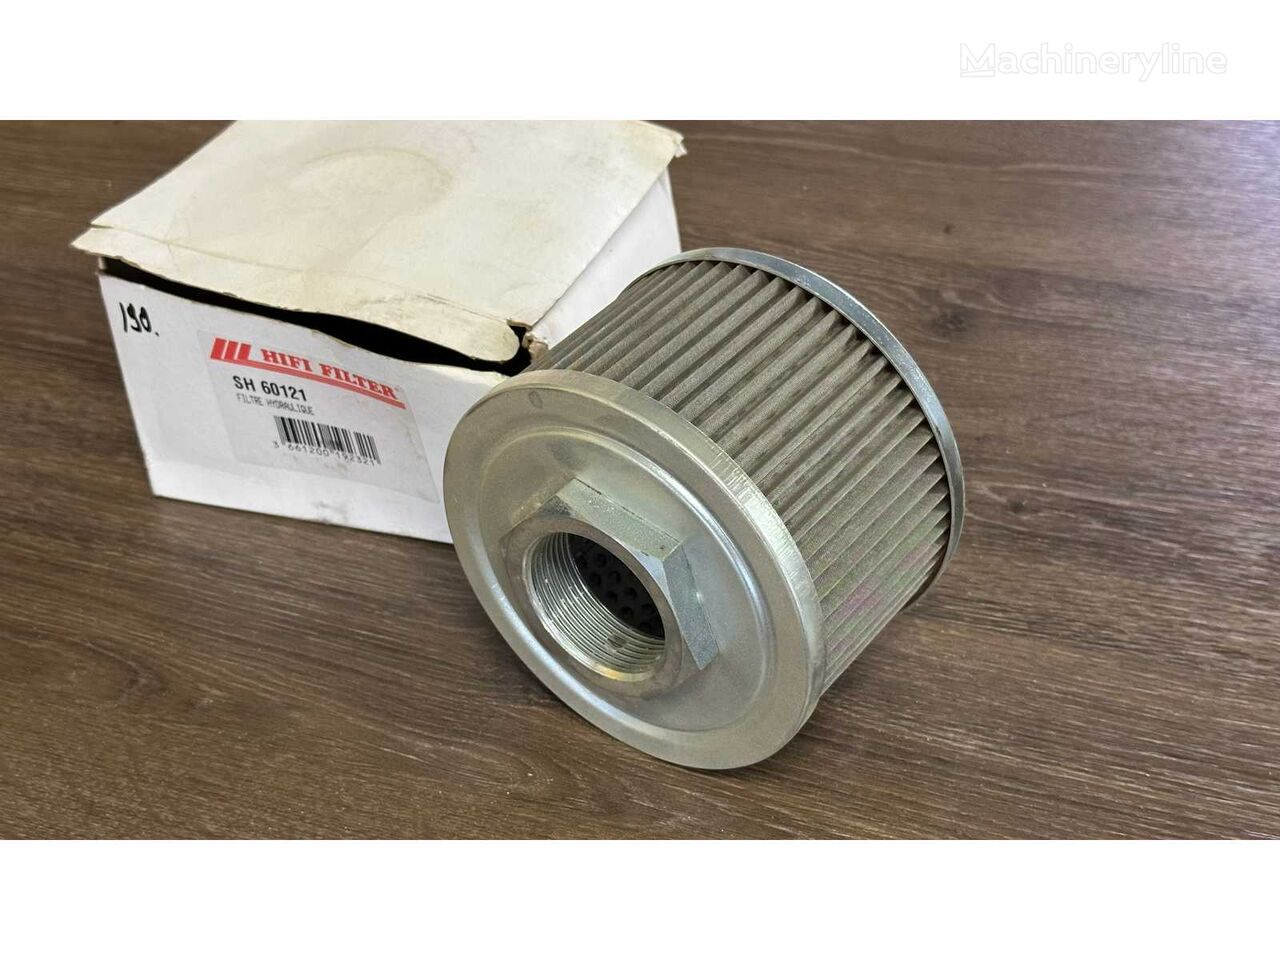 HIFI SH 60121 industrijski filter